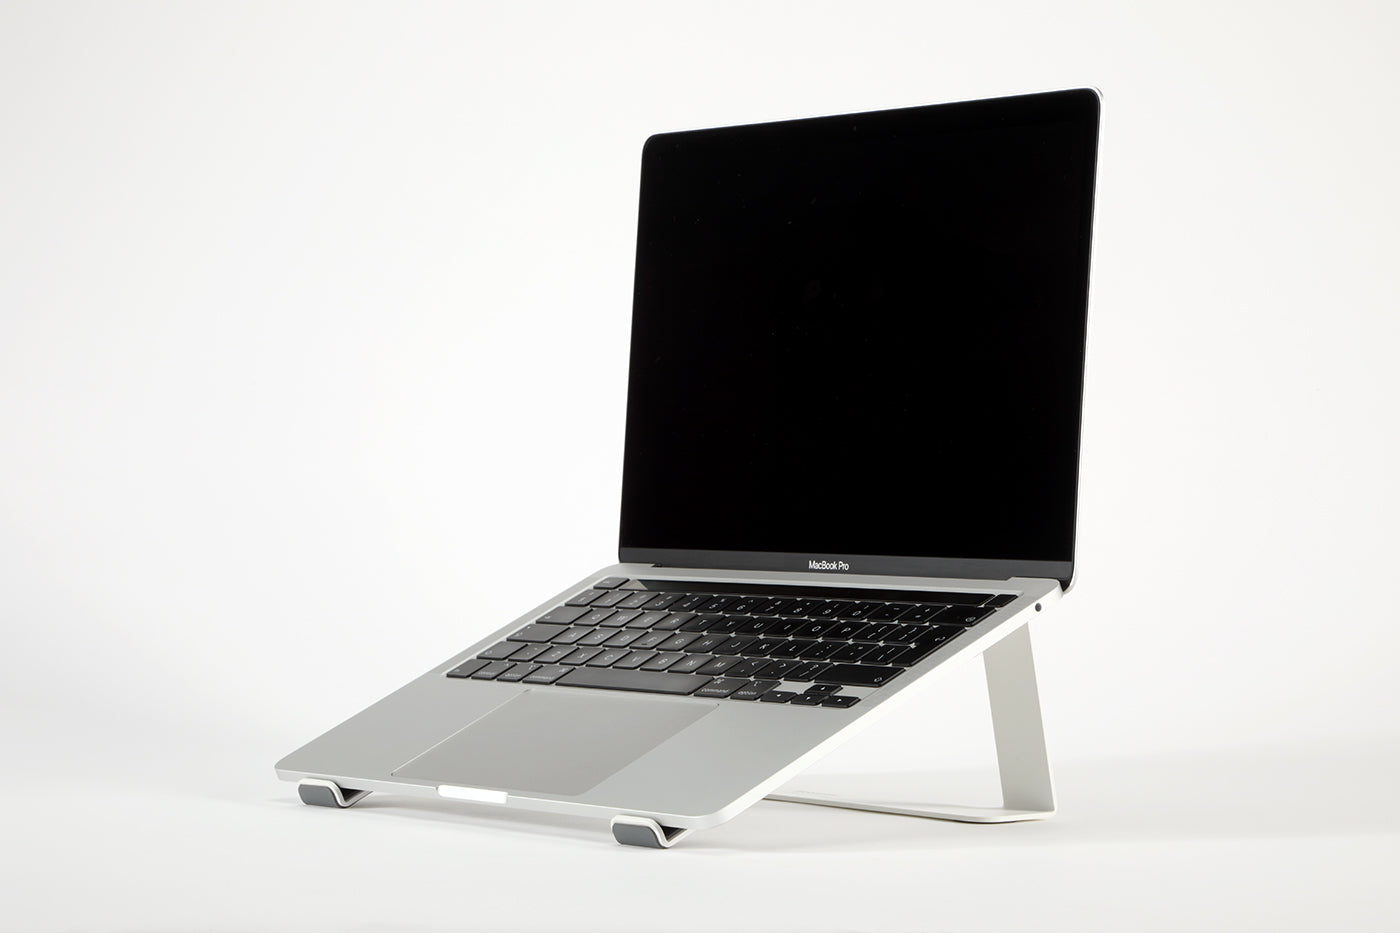 Ergonomic Laptop Stand - Basic - White